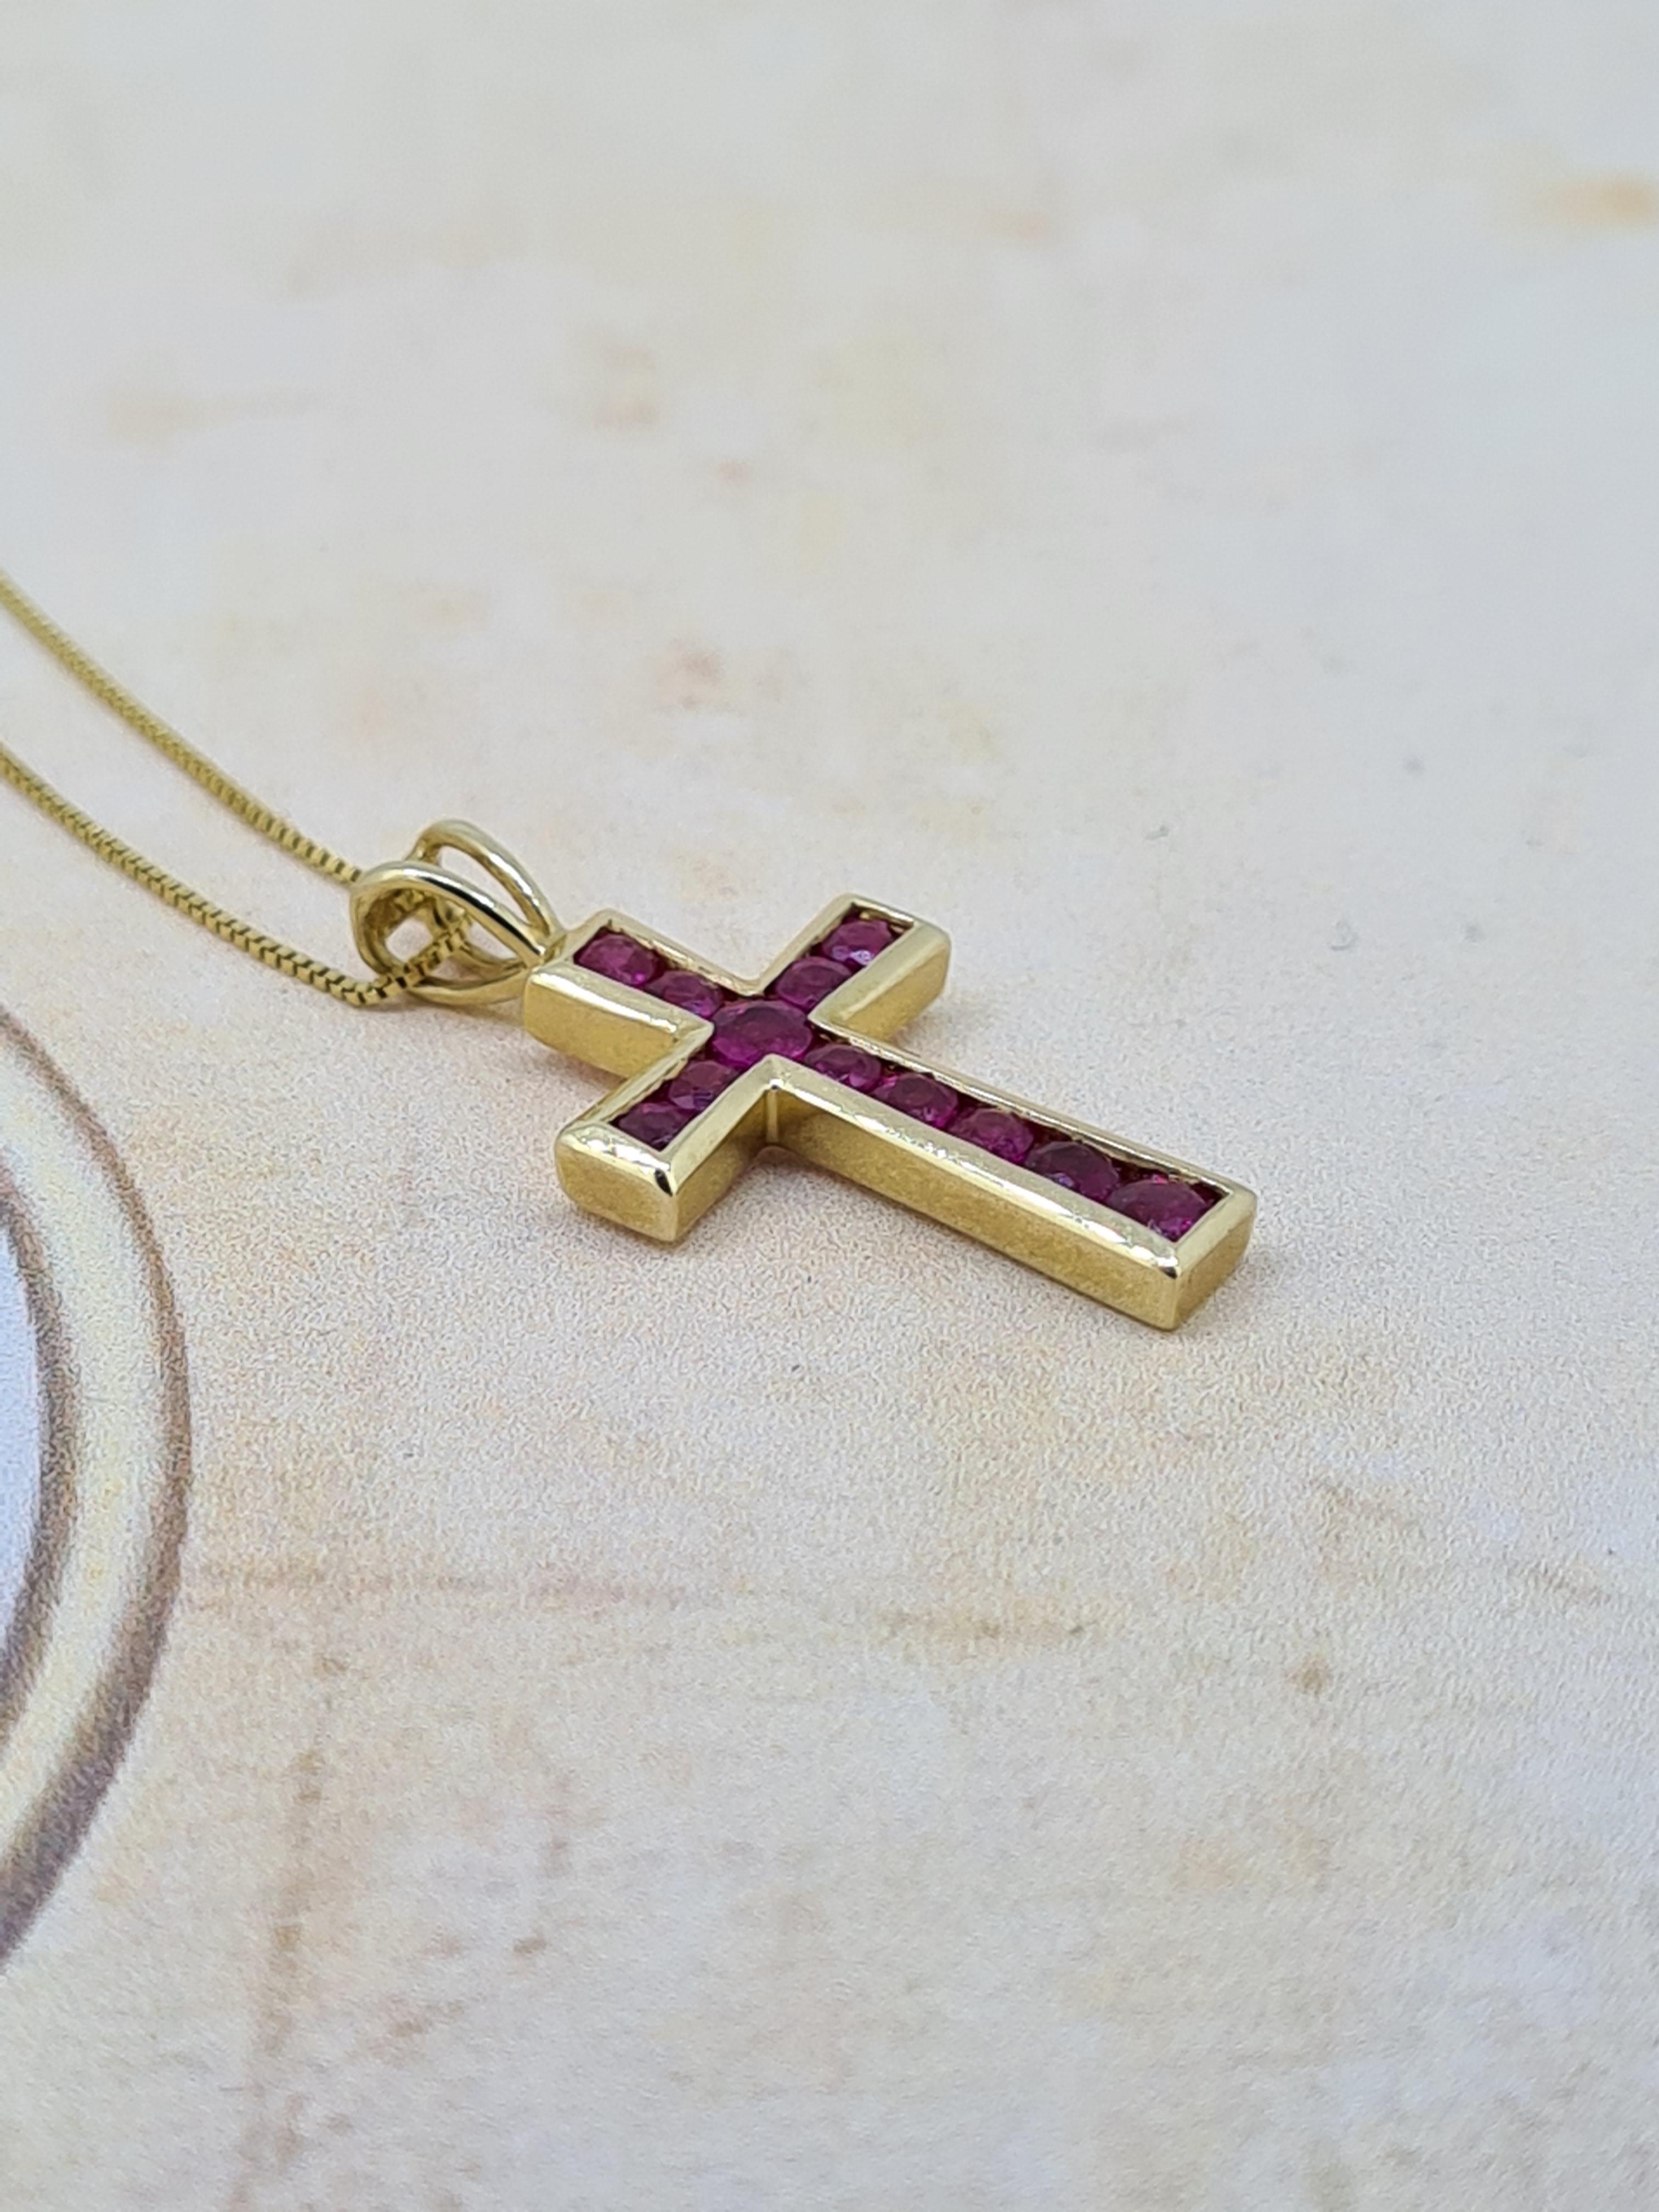 18ct yellow gold ruby set cross pendant - Image 3 of 4